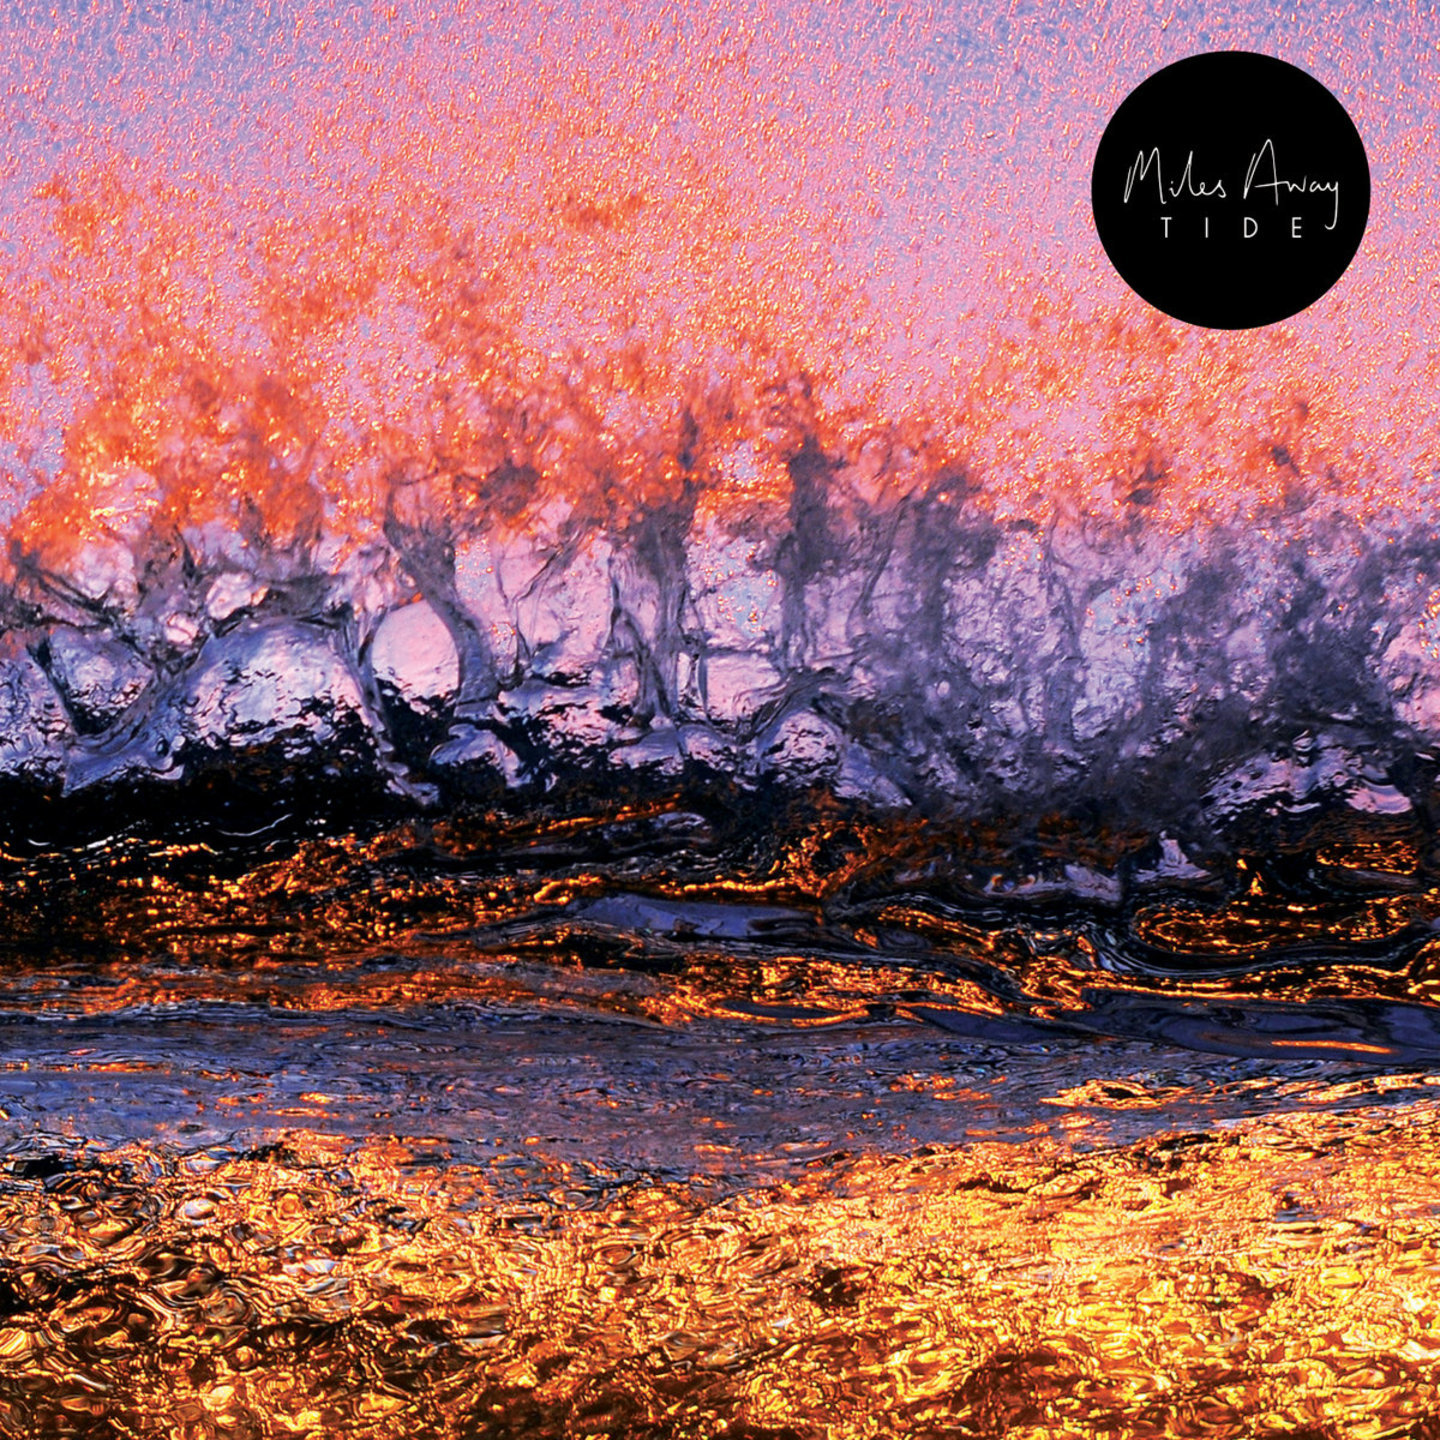 MILES AWAY - Tide LP 